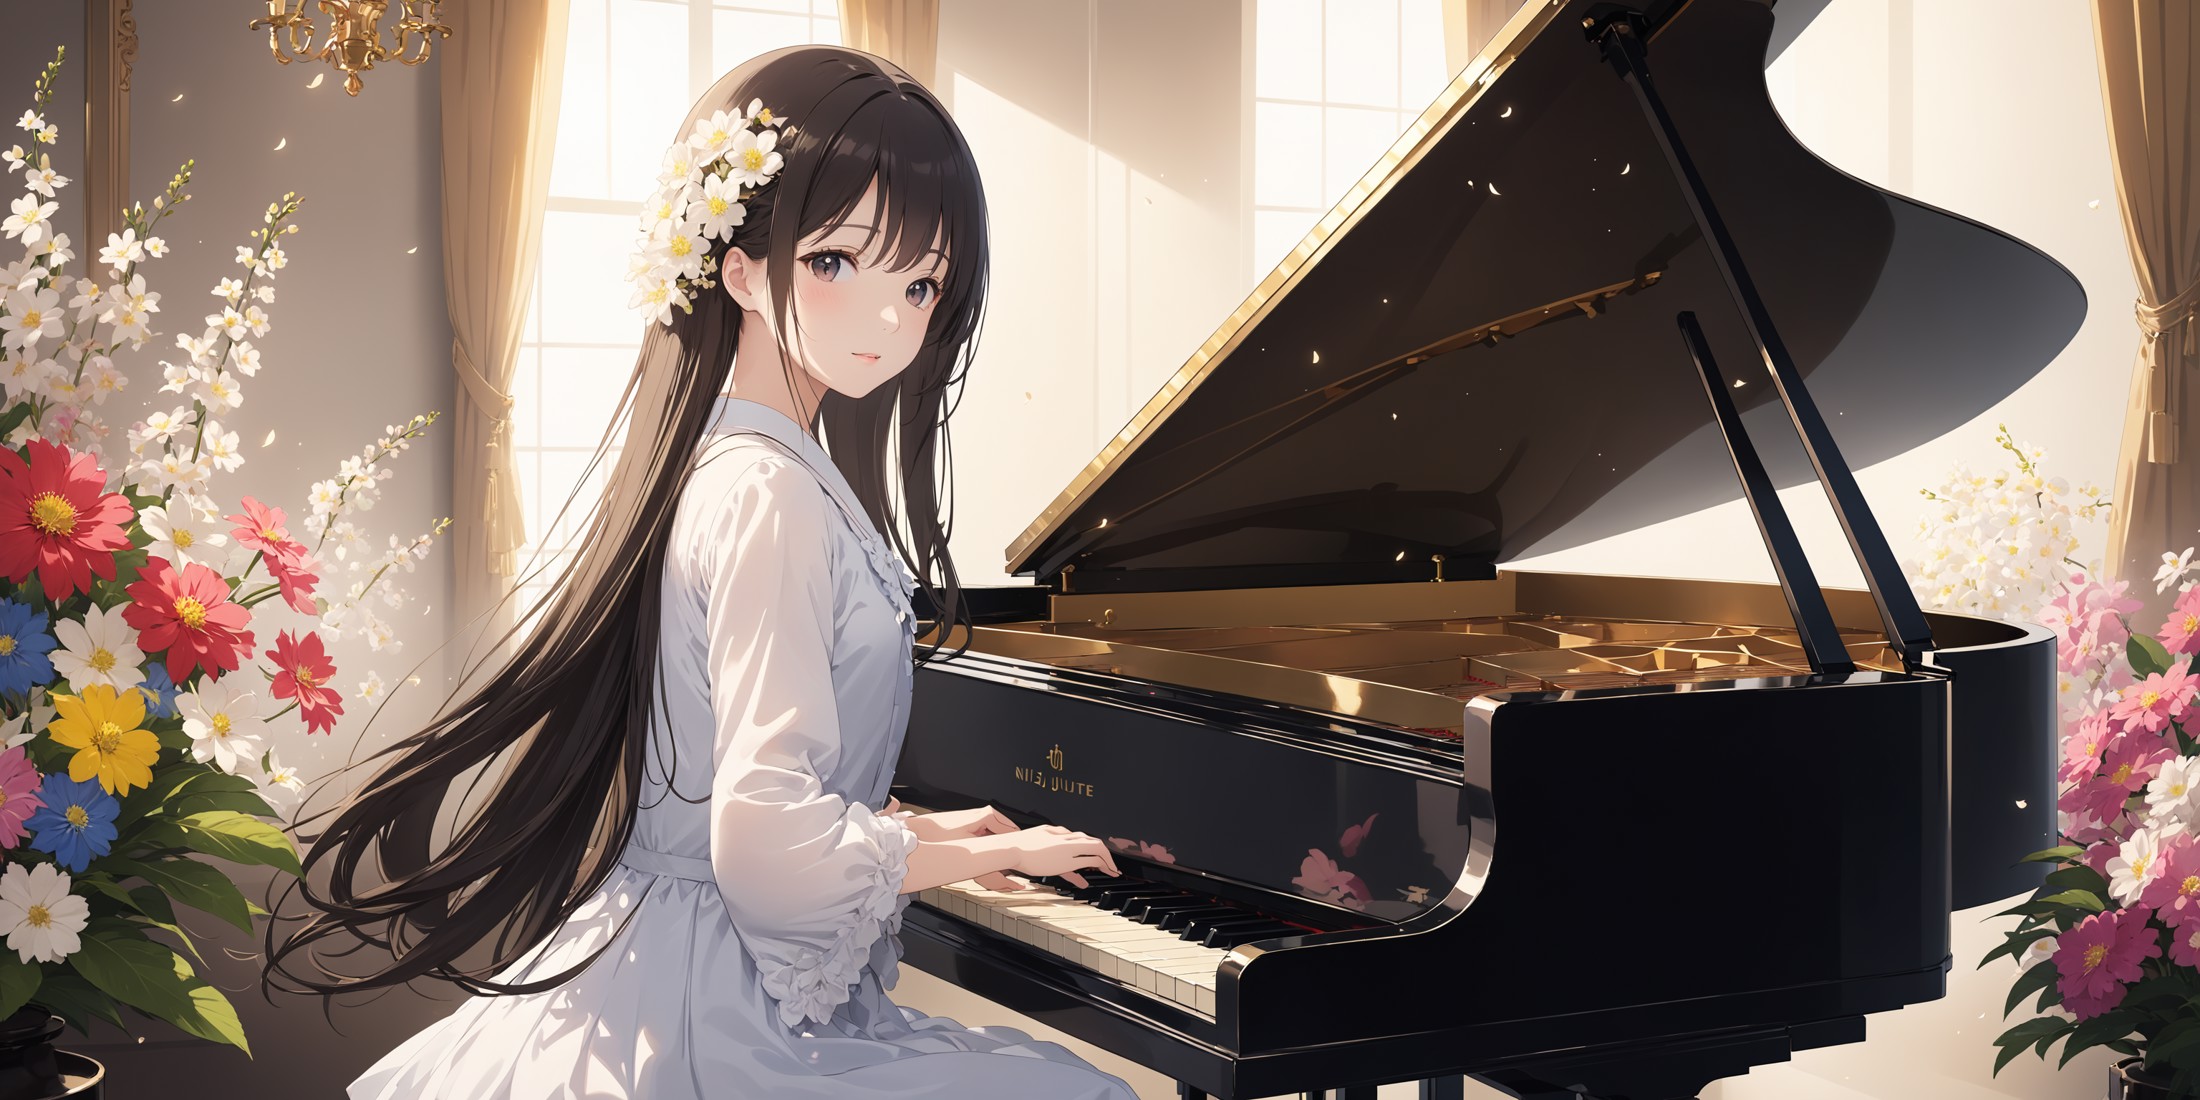 00513-4027740854-nijistyle,NijiCute,masterpieces,one girl,solo,flower,piano,long hair,.png